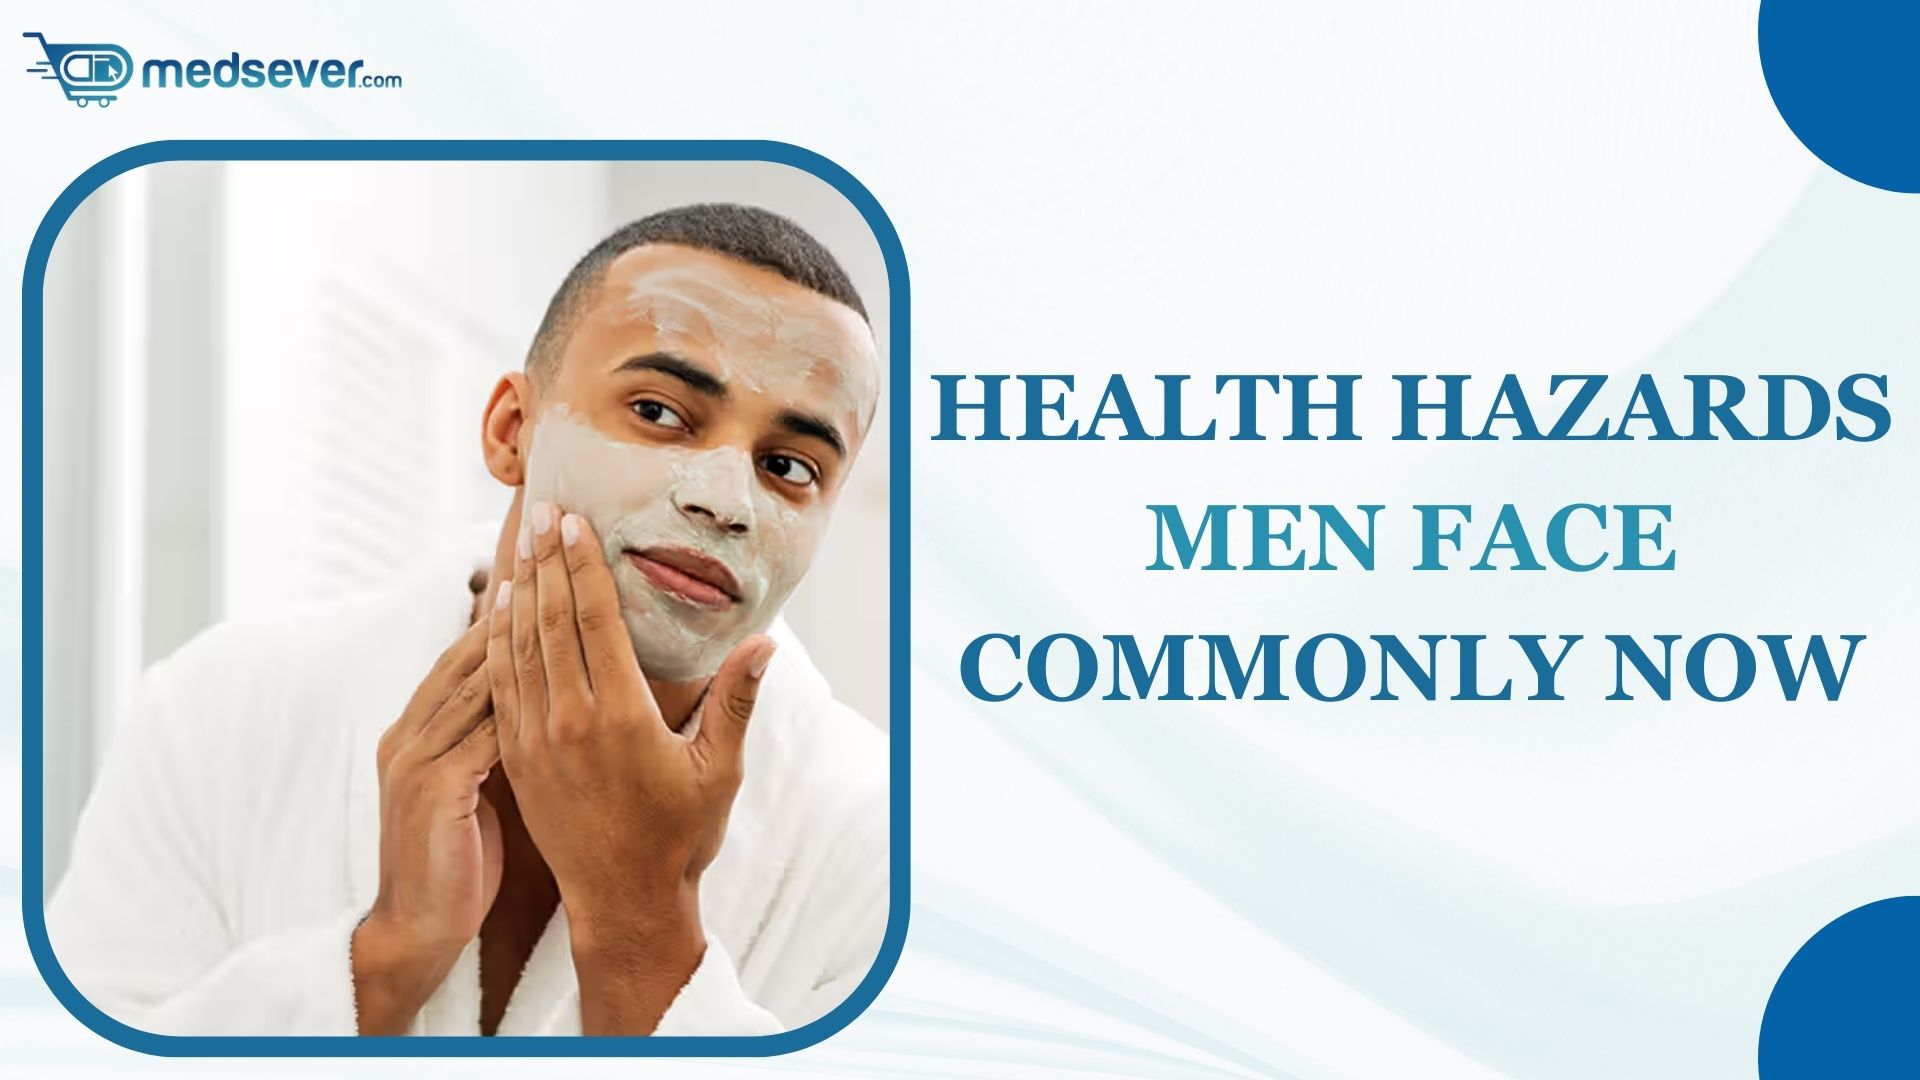 Health hazards men face commonly now - Medsever